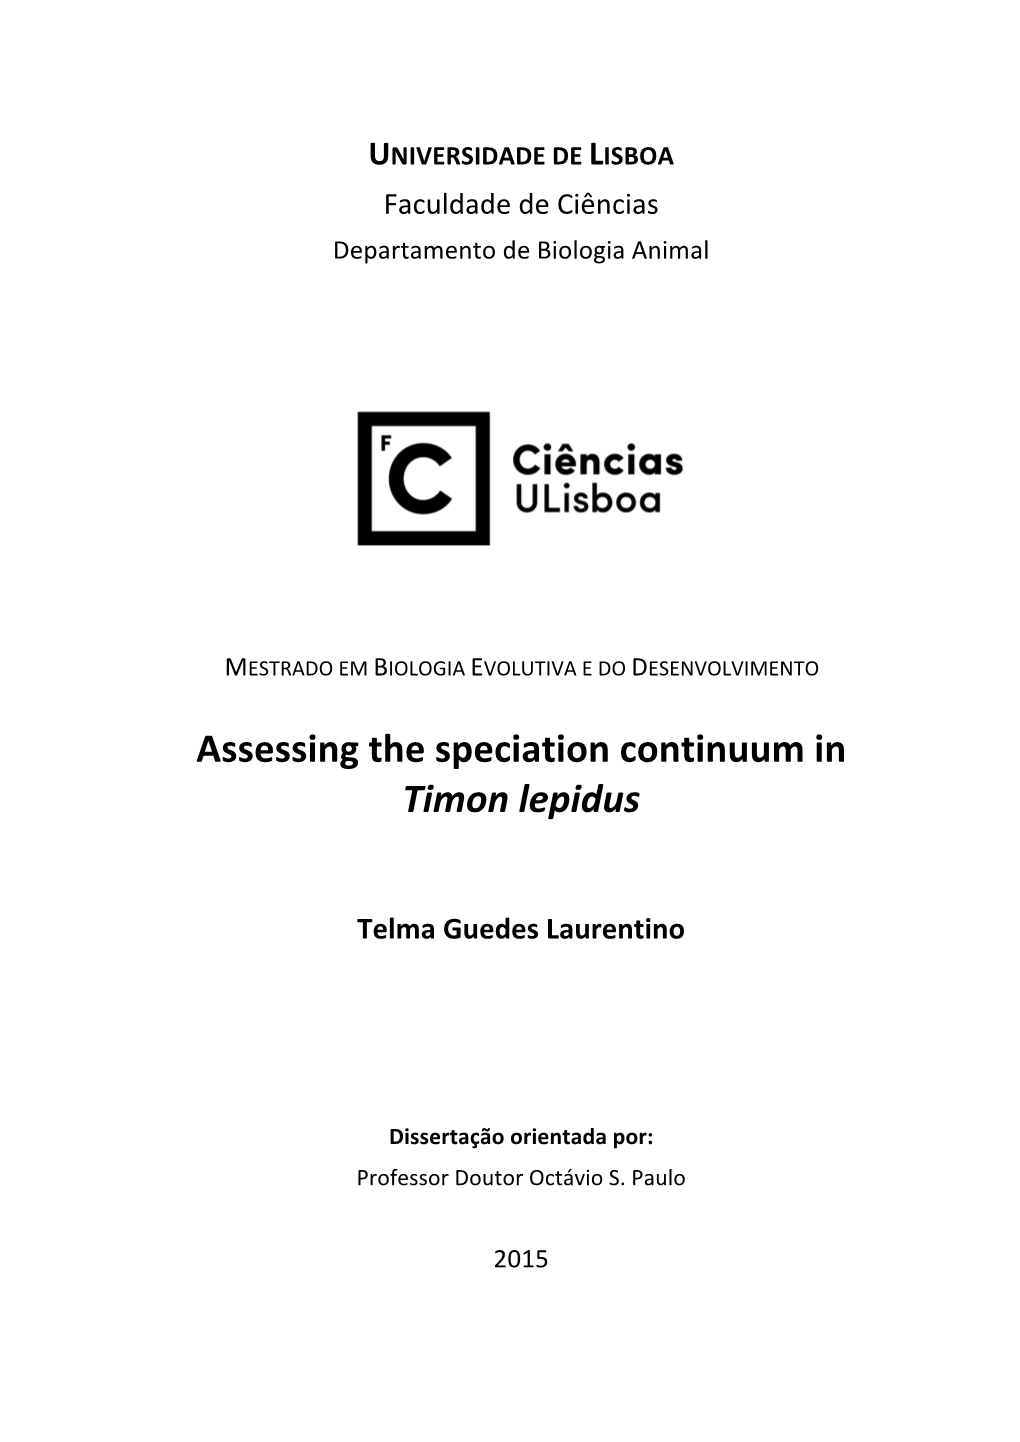 Assessing the Speciation Continuum in Timon Lepidus